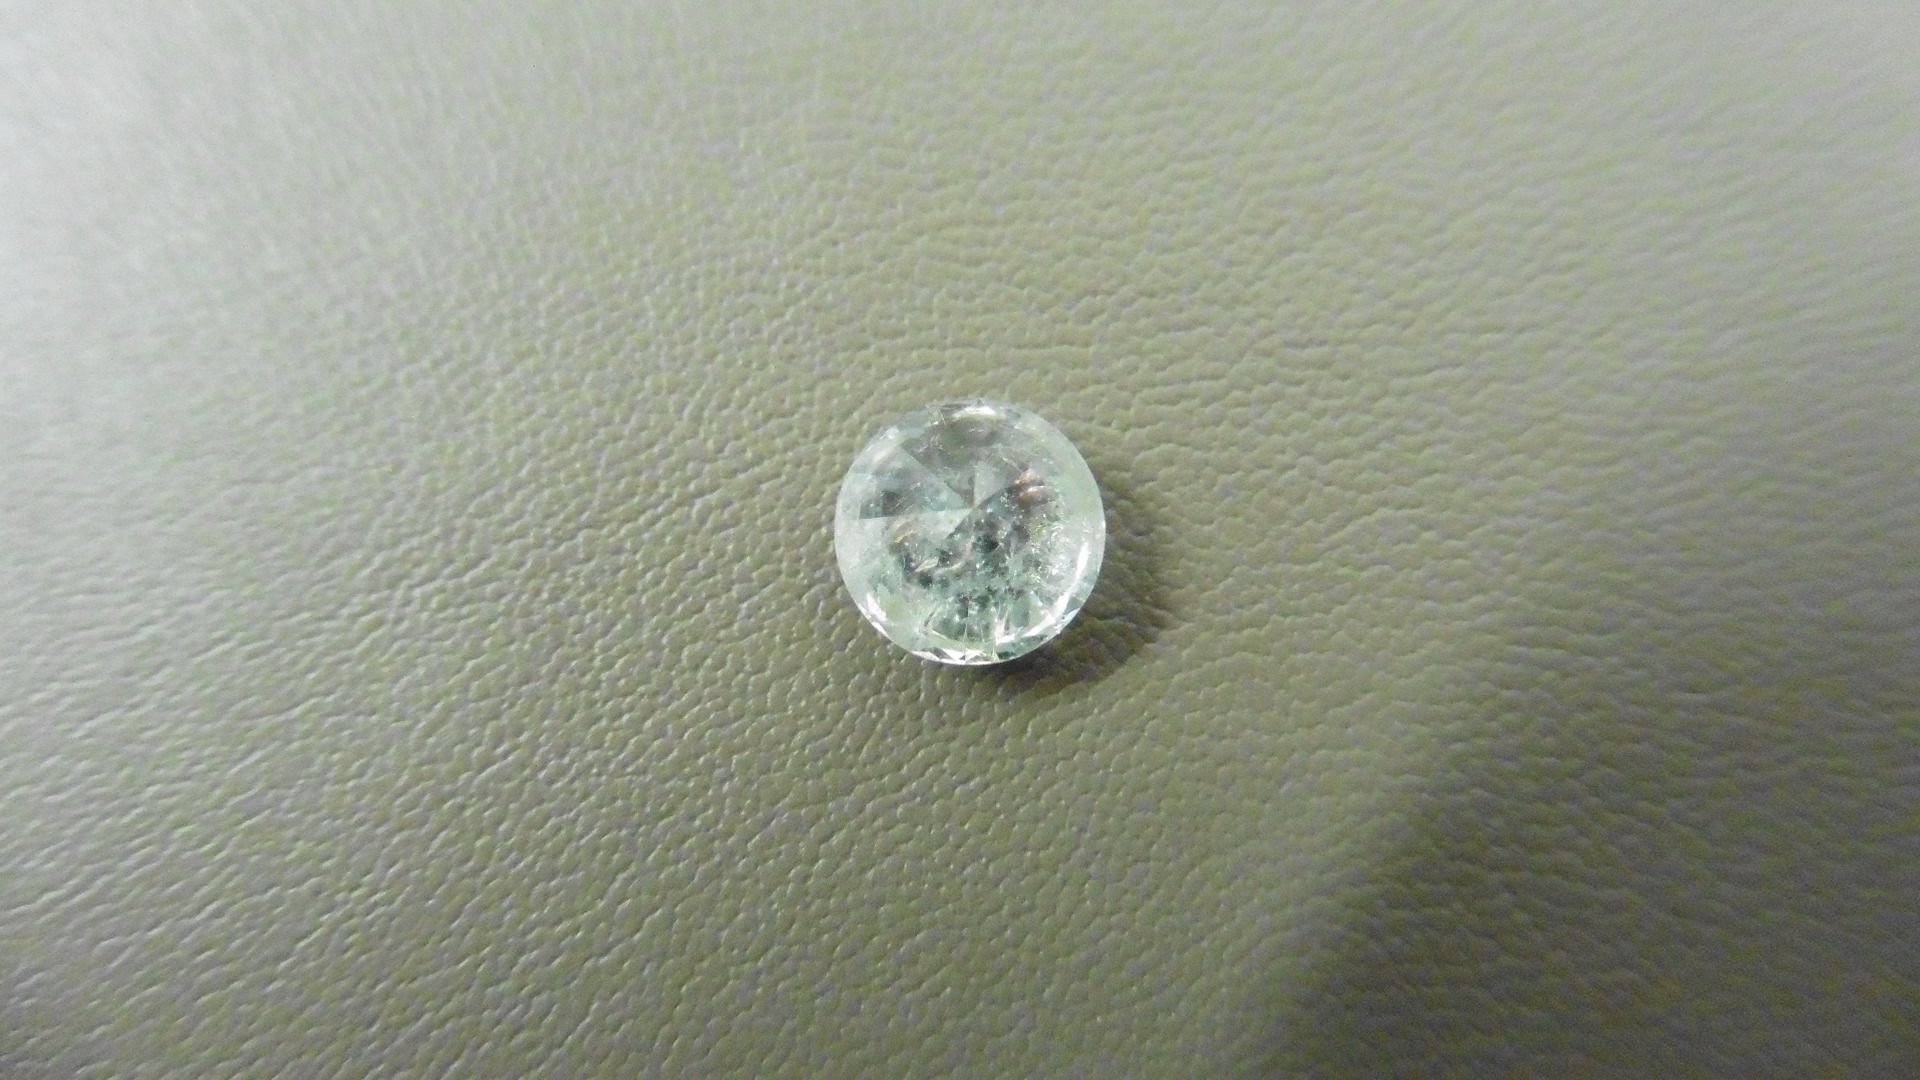 1.22ct Brilliant cut diamond K colur i1 clarity nice cut,valued at 1650 - Image 3 of 5